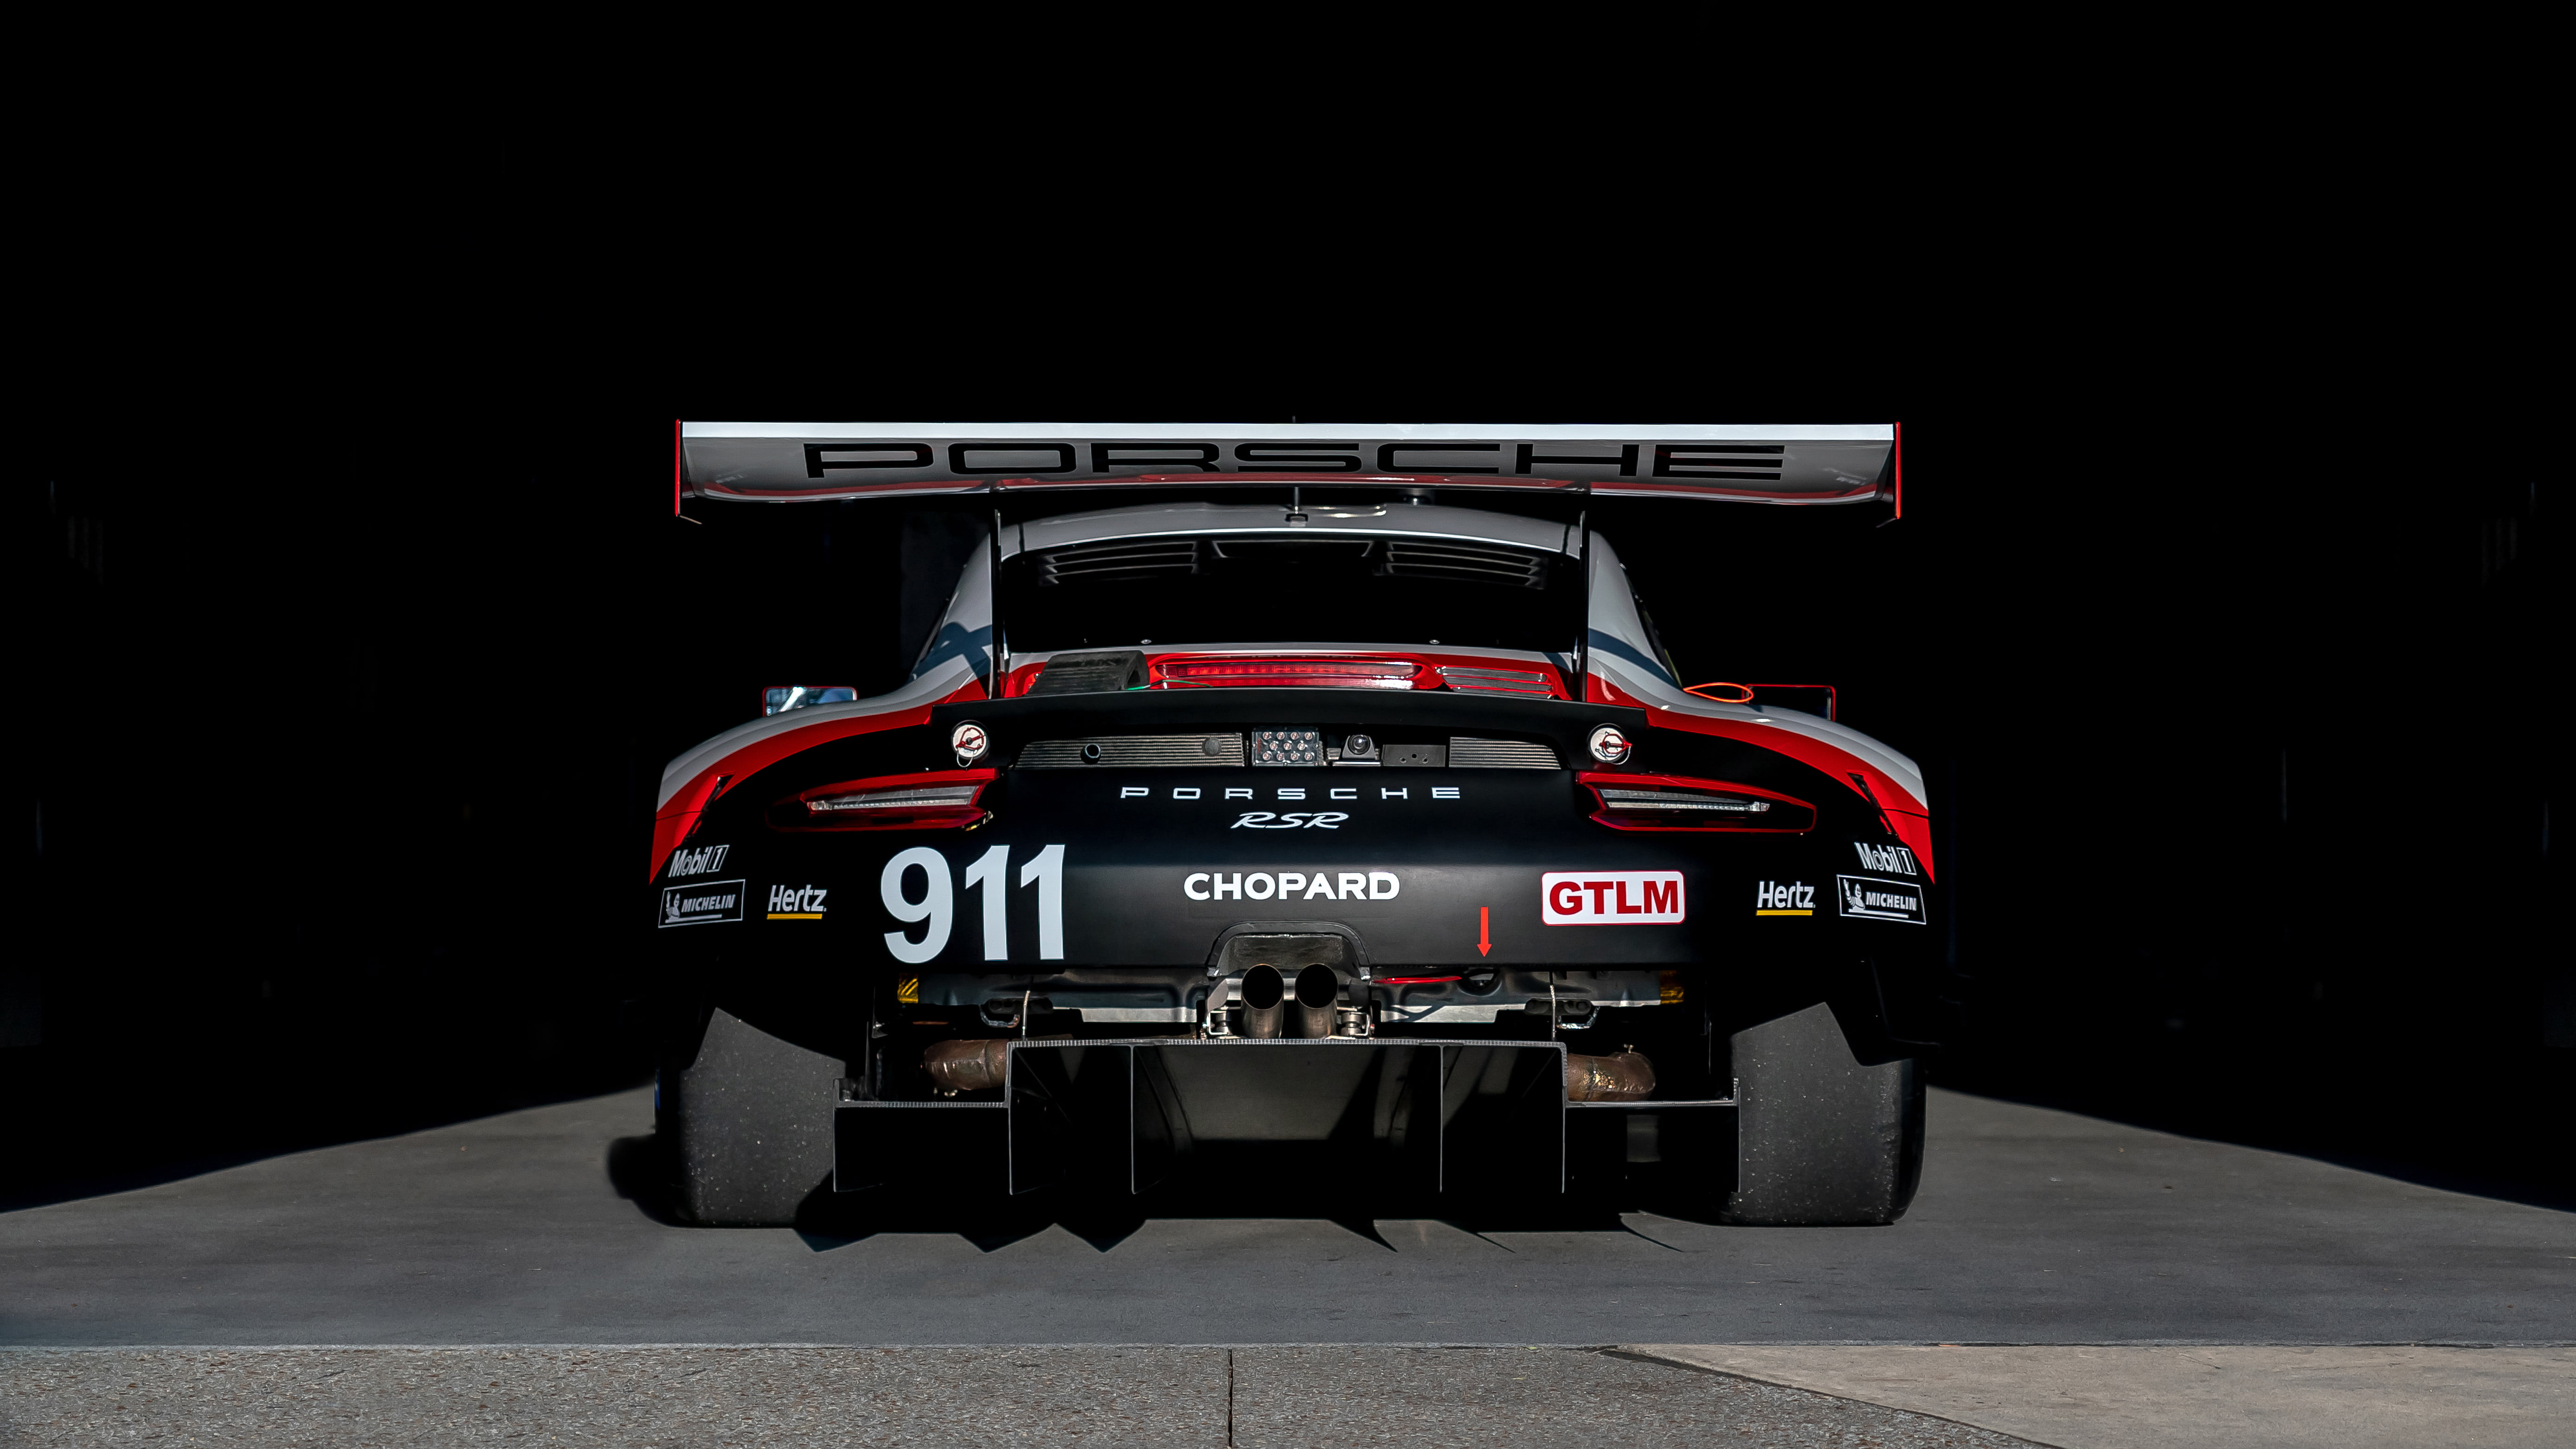 Porsche, Porsche 911 RSR, race cars